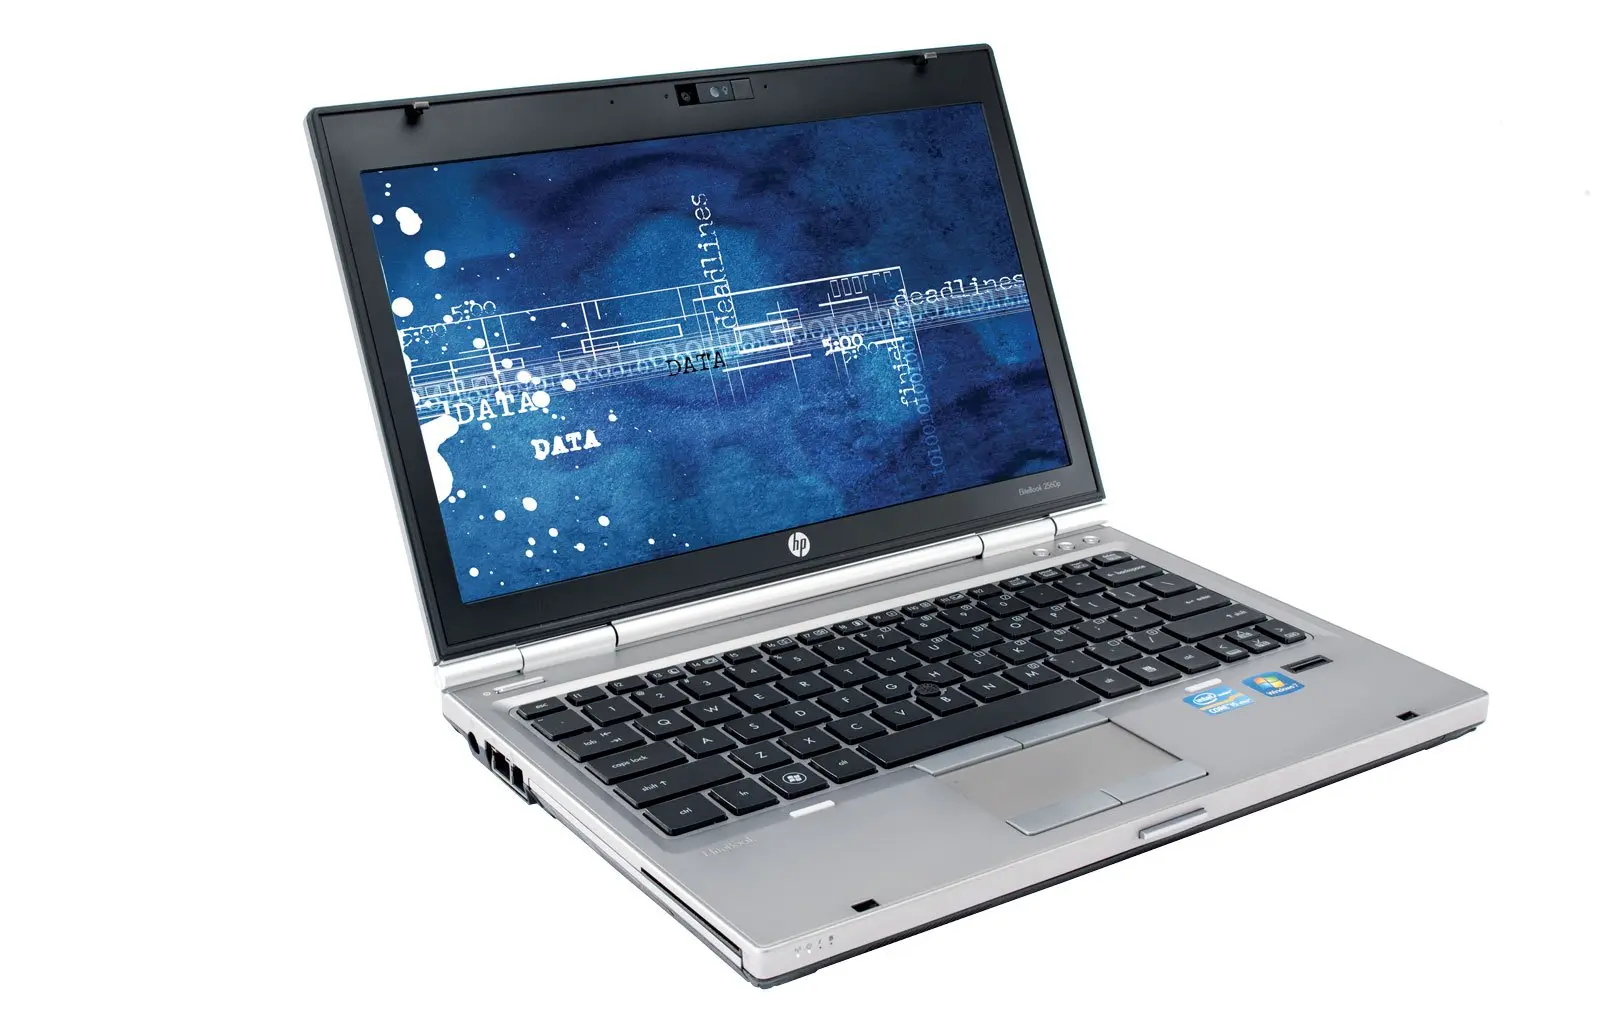 hewlett-packard hp elitebook 2560p driver - How much RAM does the HP EliteBook 2560p support